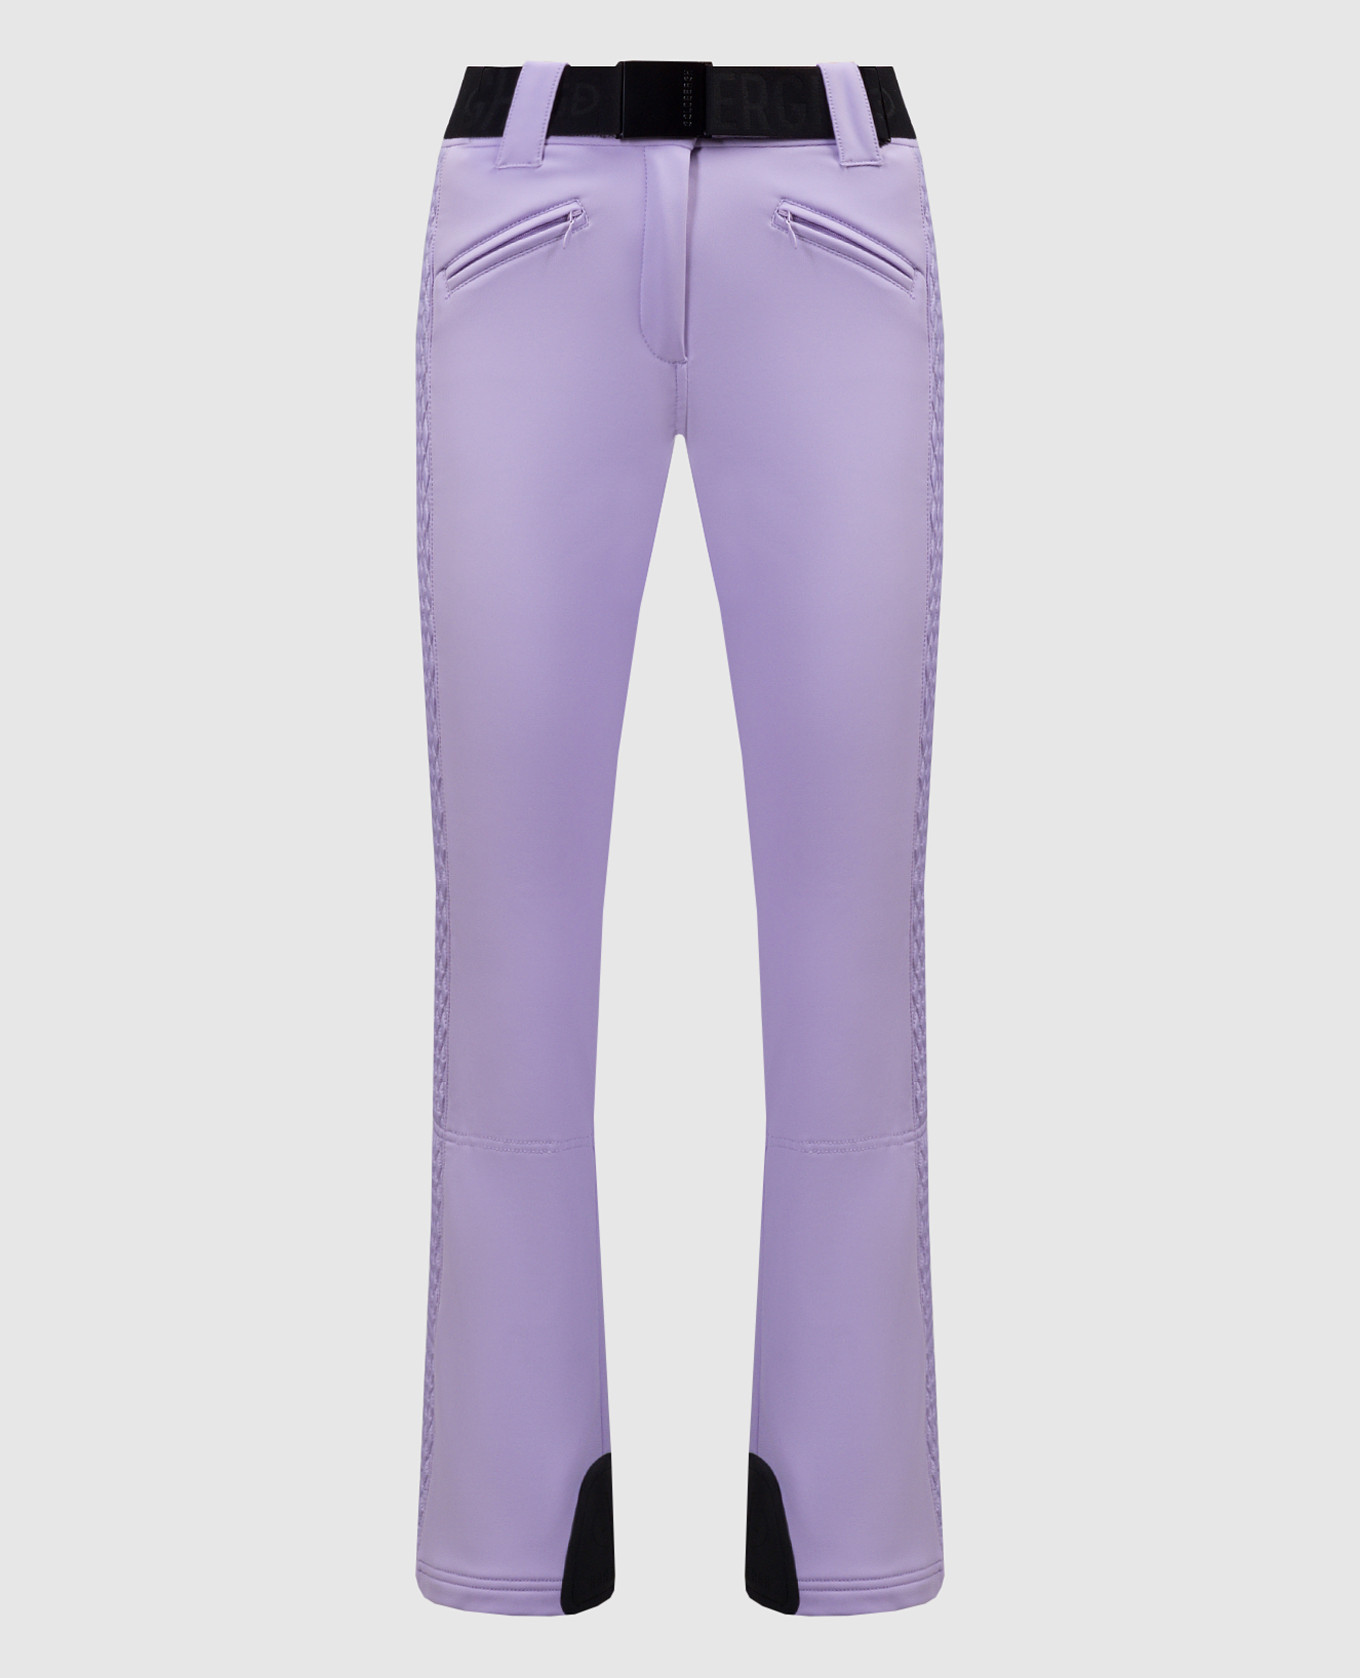 Broore Ski purple ski pants with stripes